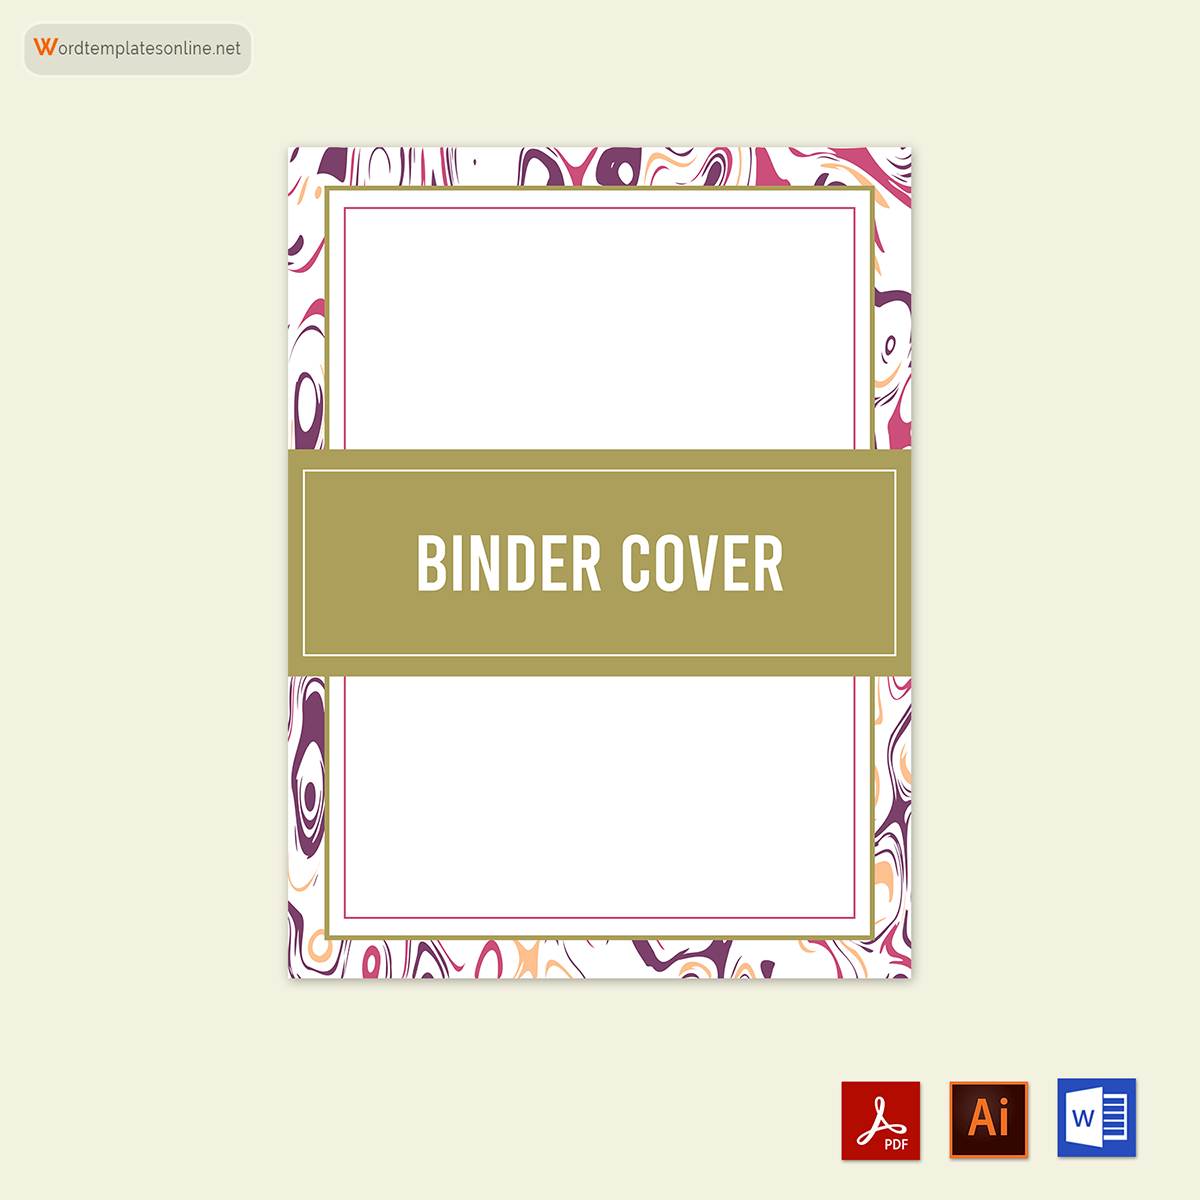 Binder cover template pdf